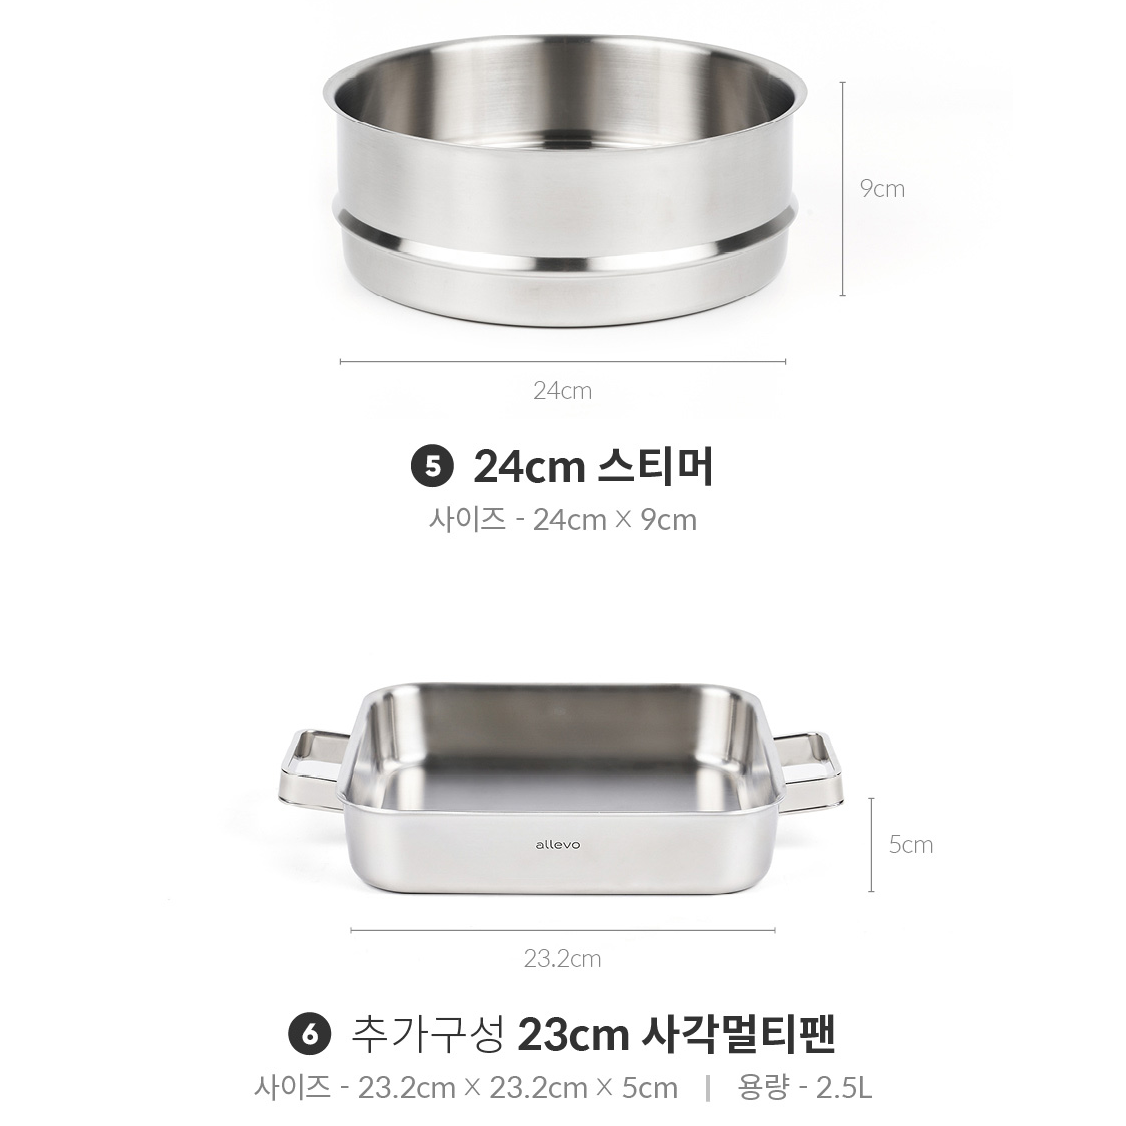 [allevo] 316L Stainless Premium Cookware  Set